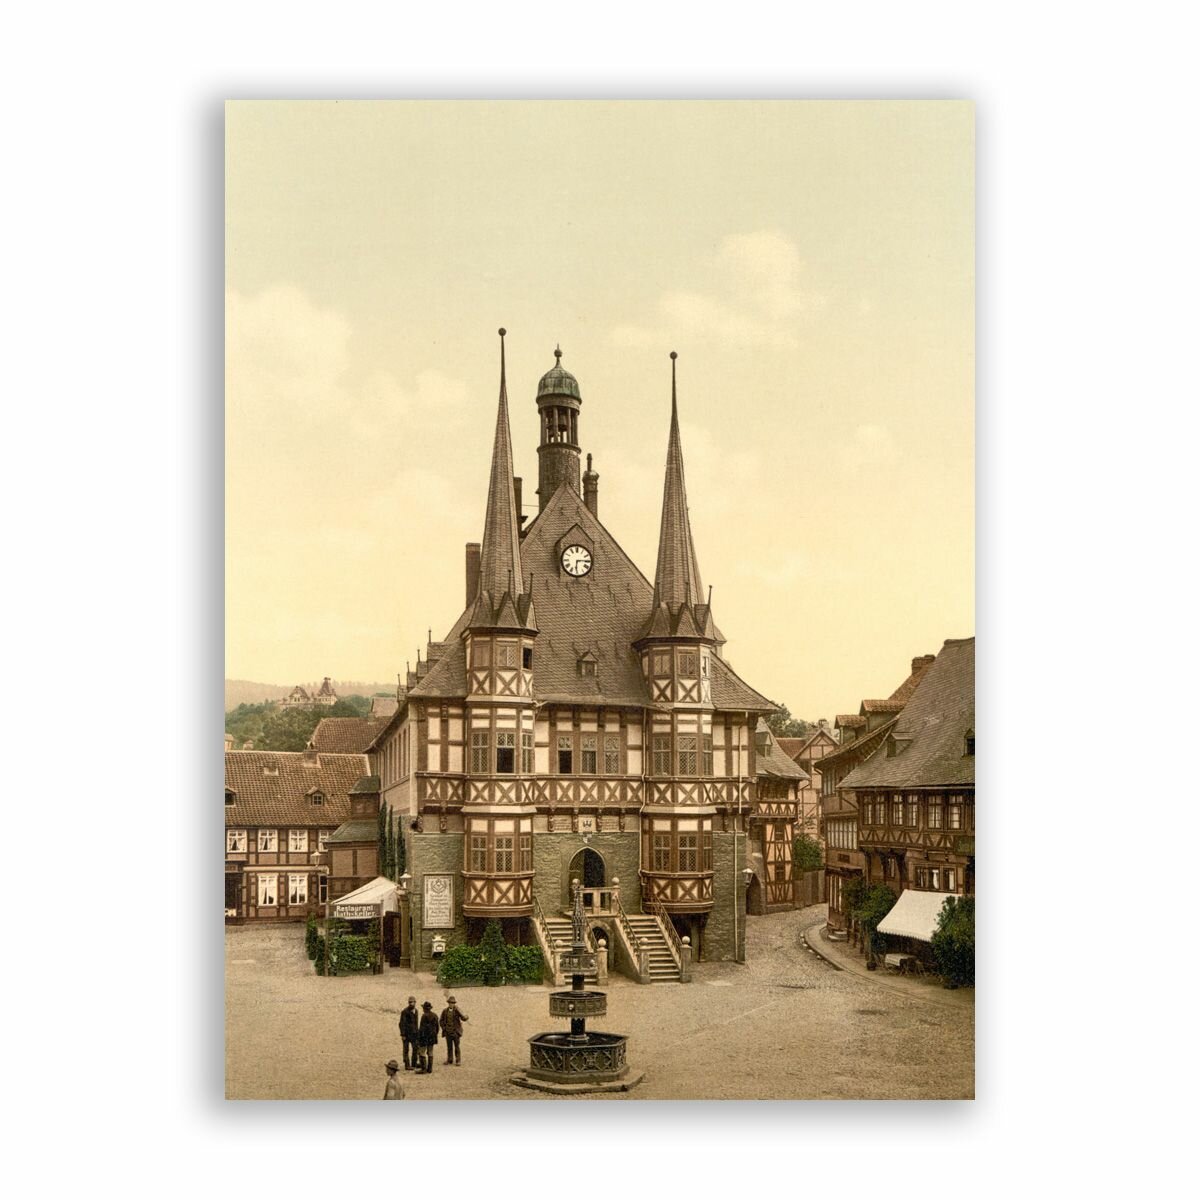 Постер, плакат на бумаге / The town hall, Wernigerode, Hartz, Germany / Размер 30 x 40 см